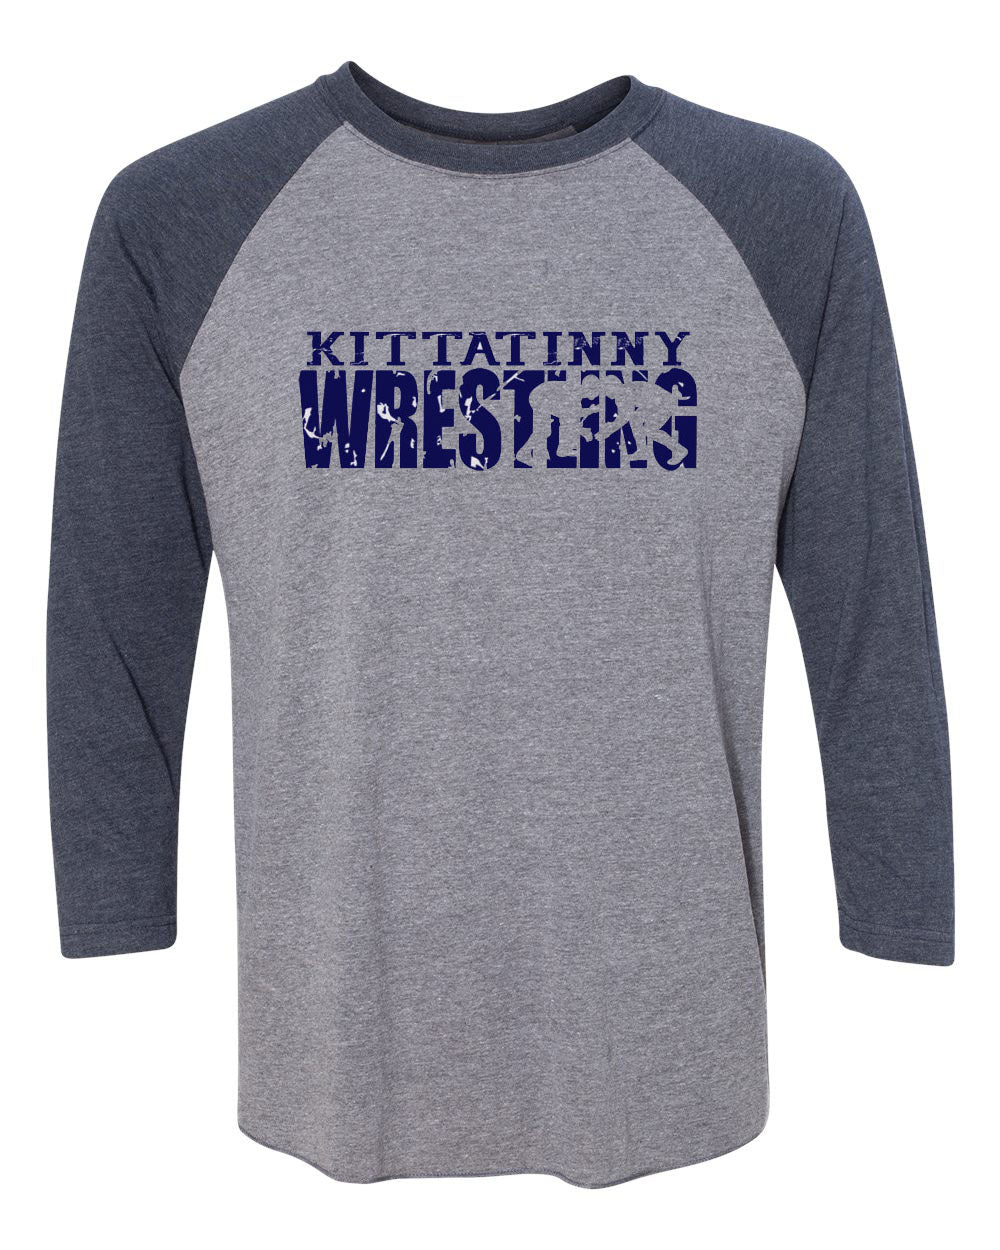 Kittatinny Wrestling Design 2 raglan shirt